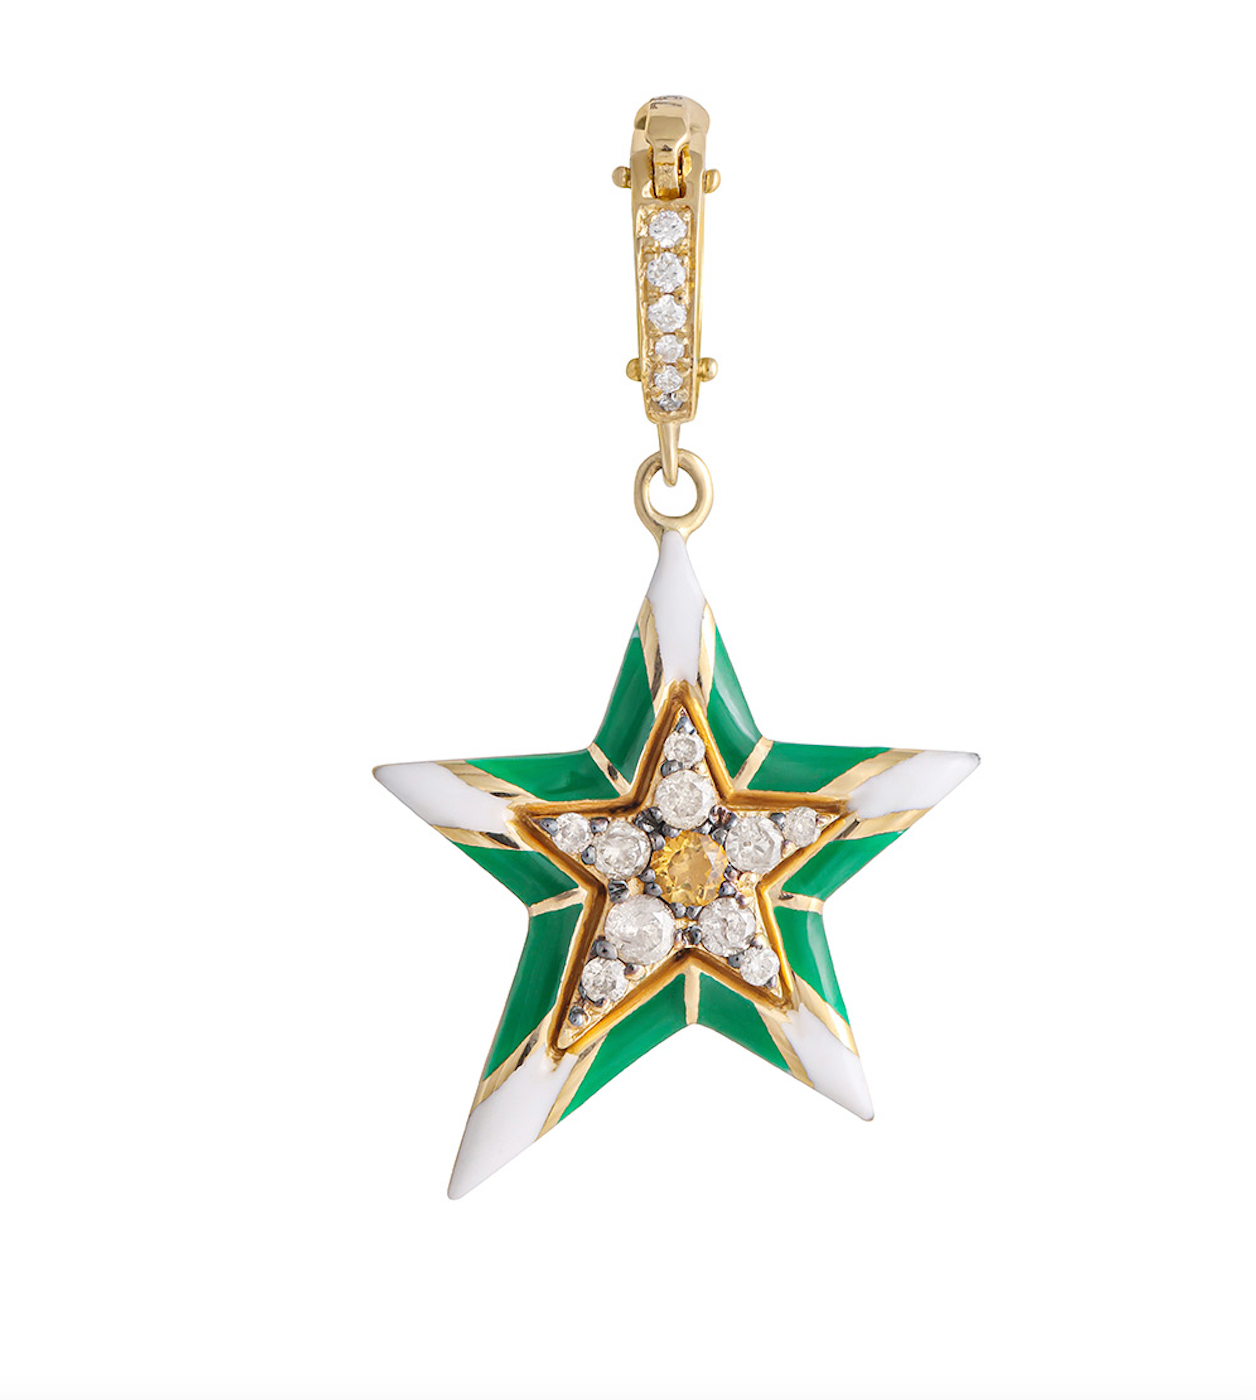 J by boghossian, gold, charm, pendant, star, white diamond, green enamel, white enamel, citrine